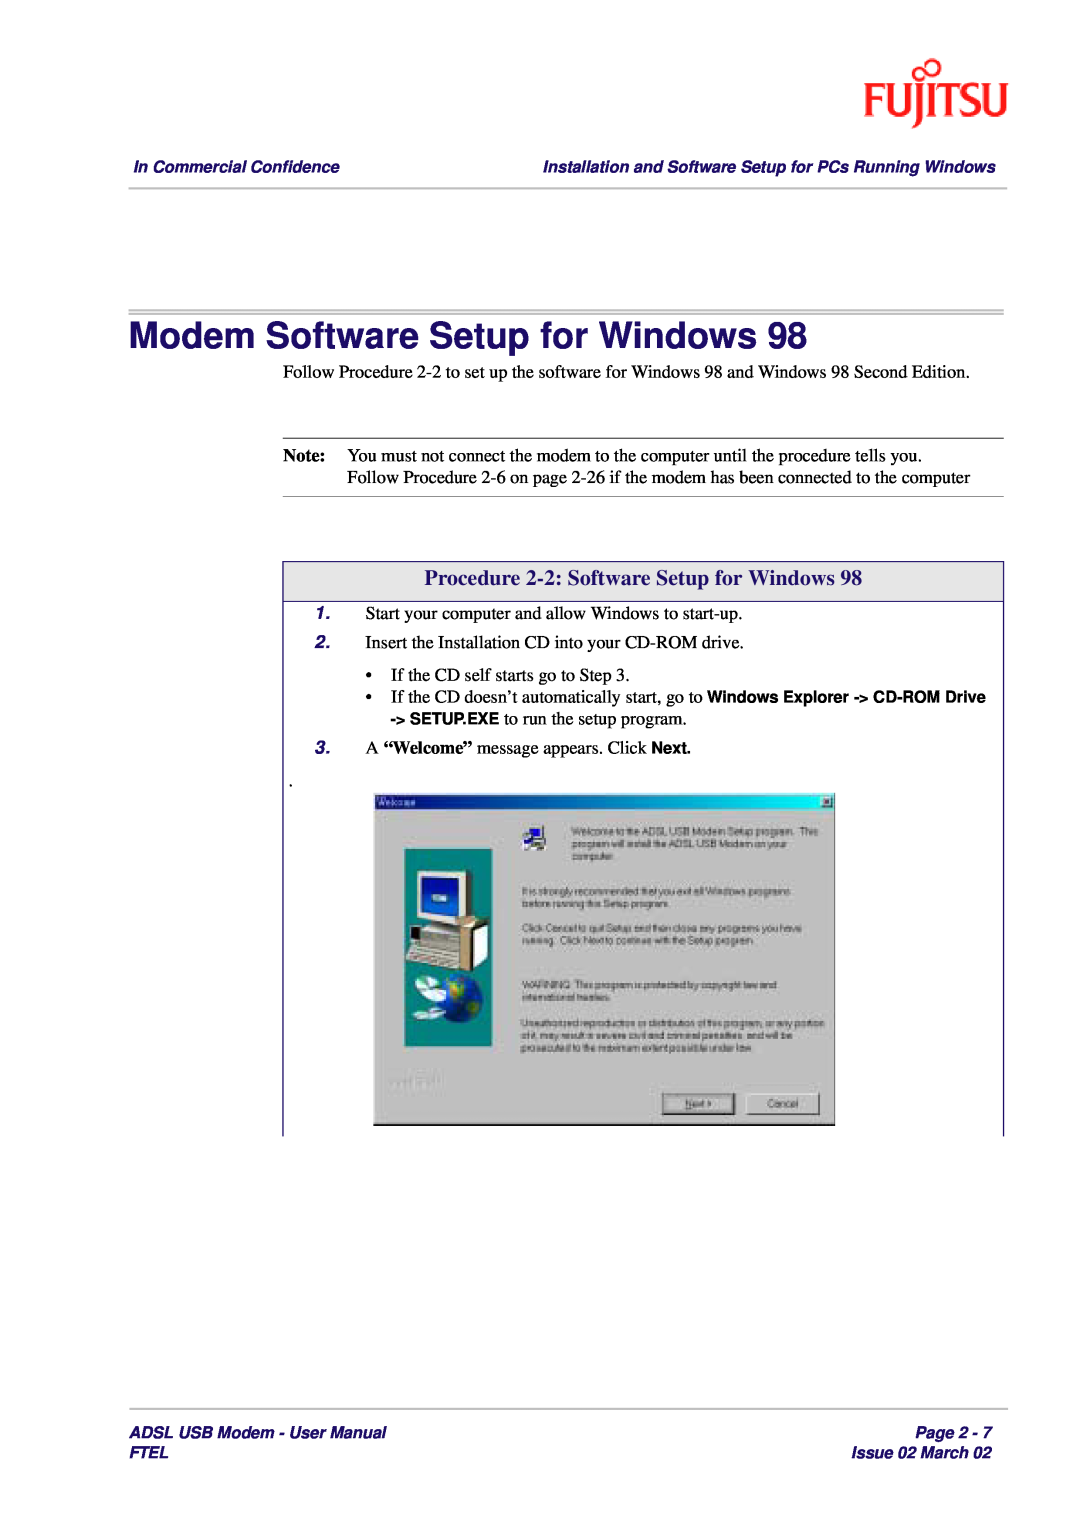 Fujitsu 3XAX-00803AAS user manual Modem Software Setup for Windows, Procedure 2-2 Software Setup for Windows 